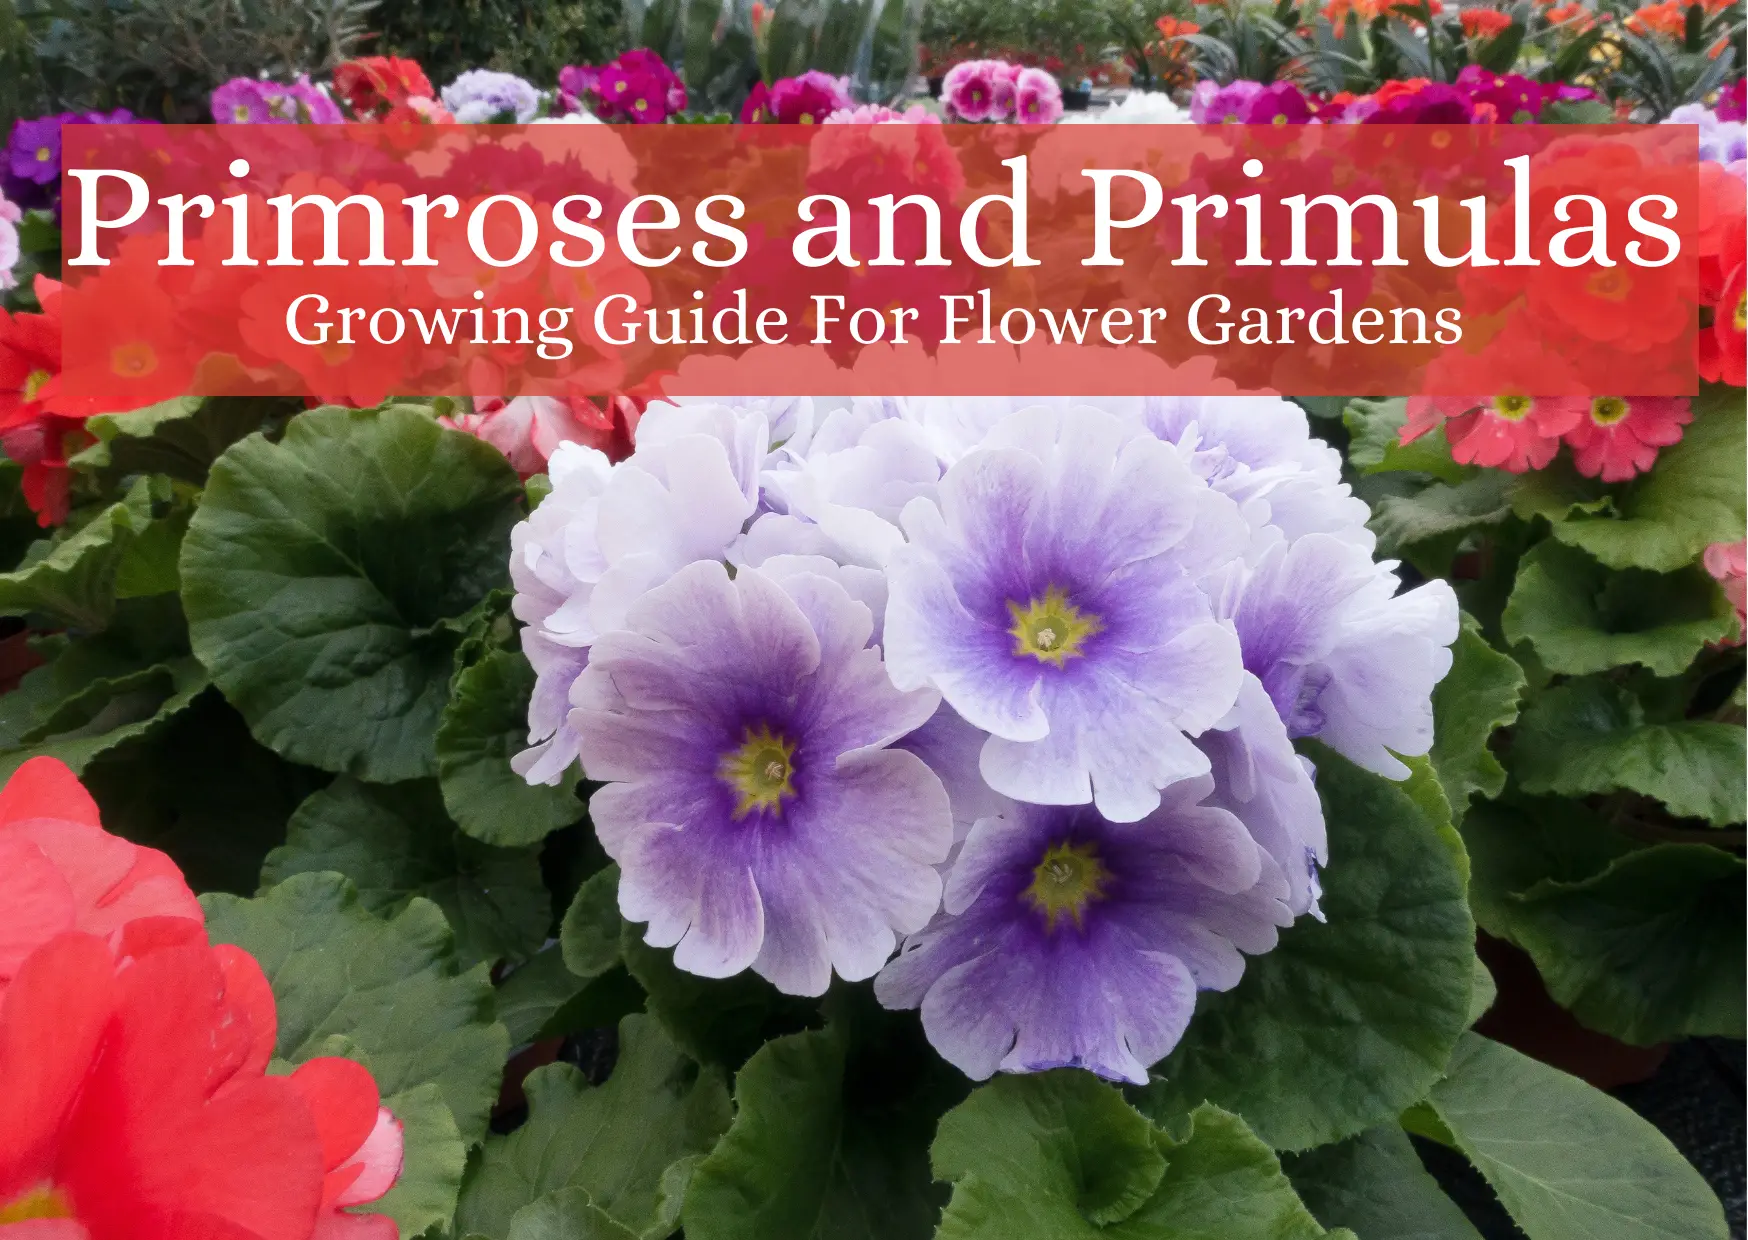 Primroses and Primulas Growing Guide